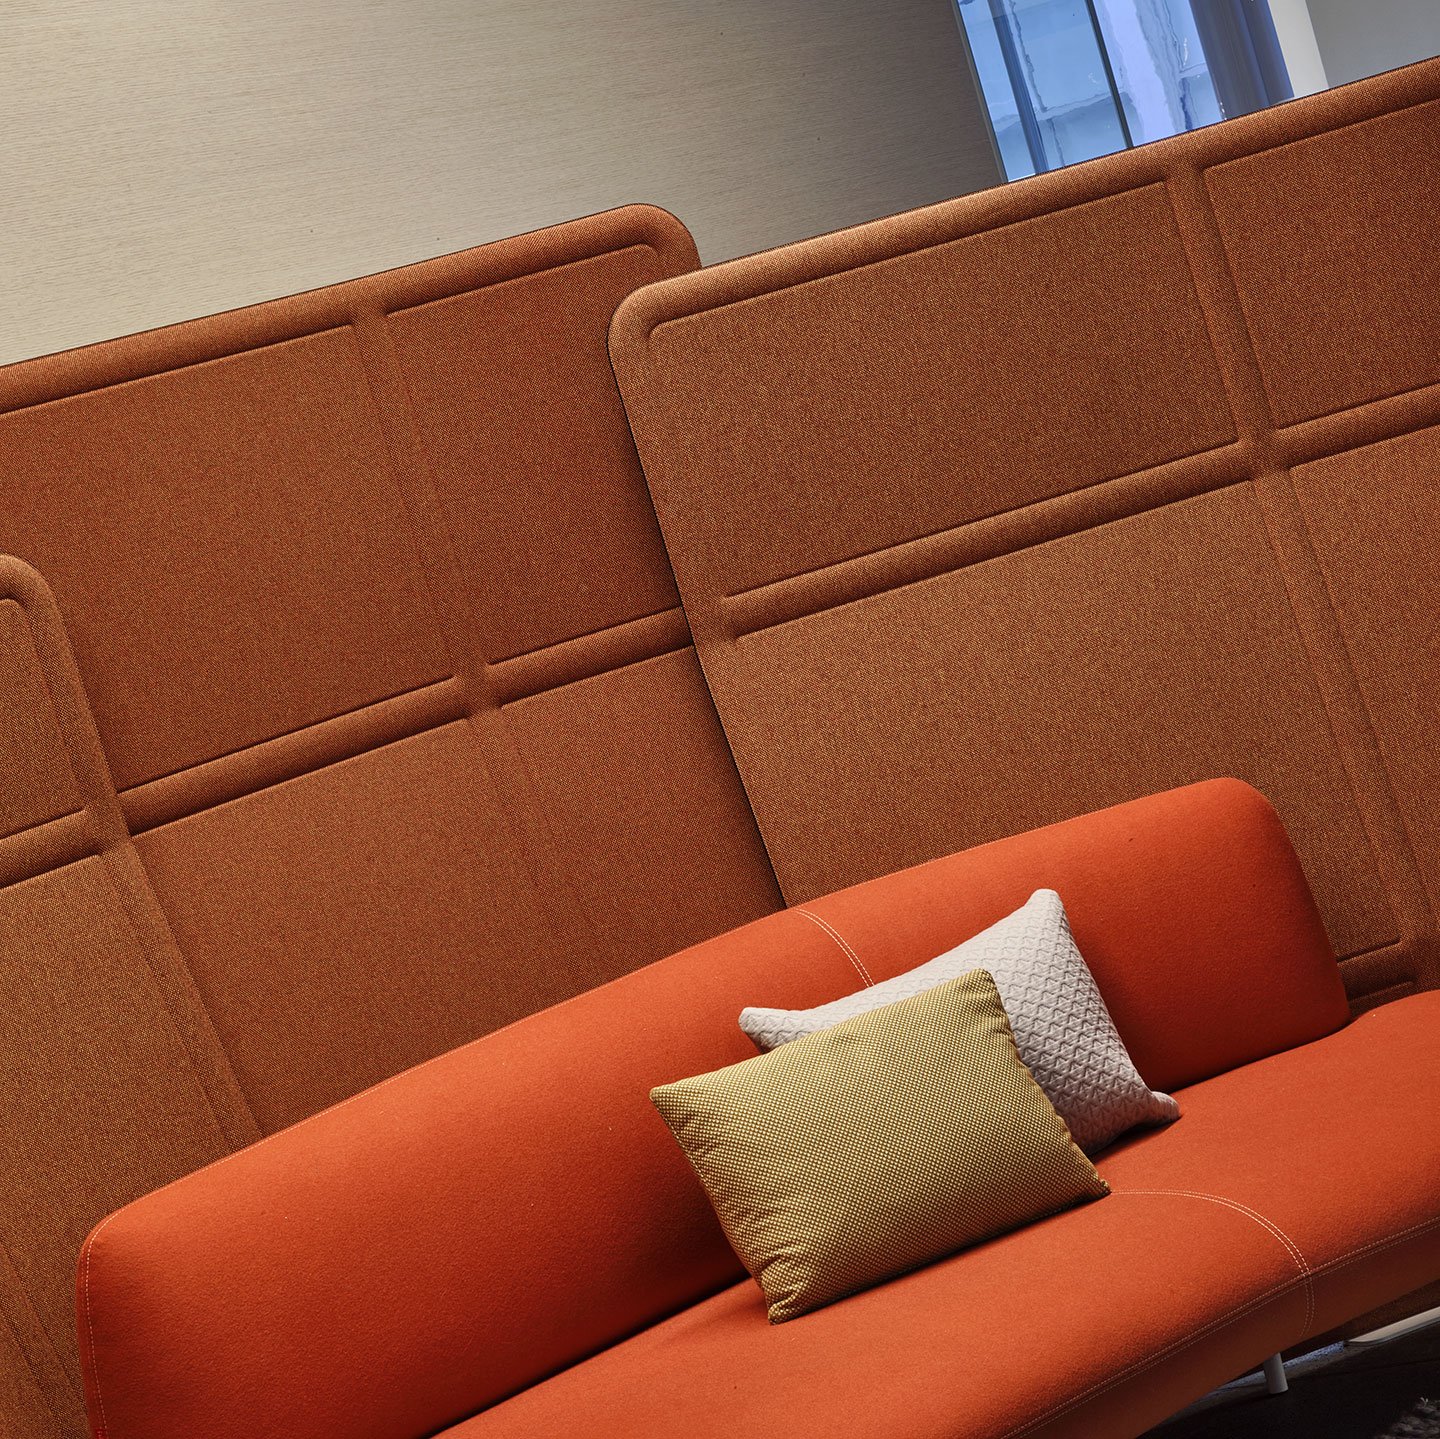 Haworth Openest Plume Screen in orange color over orange couch in open space